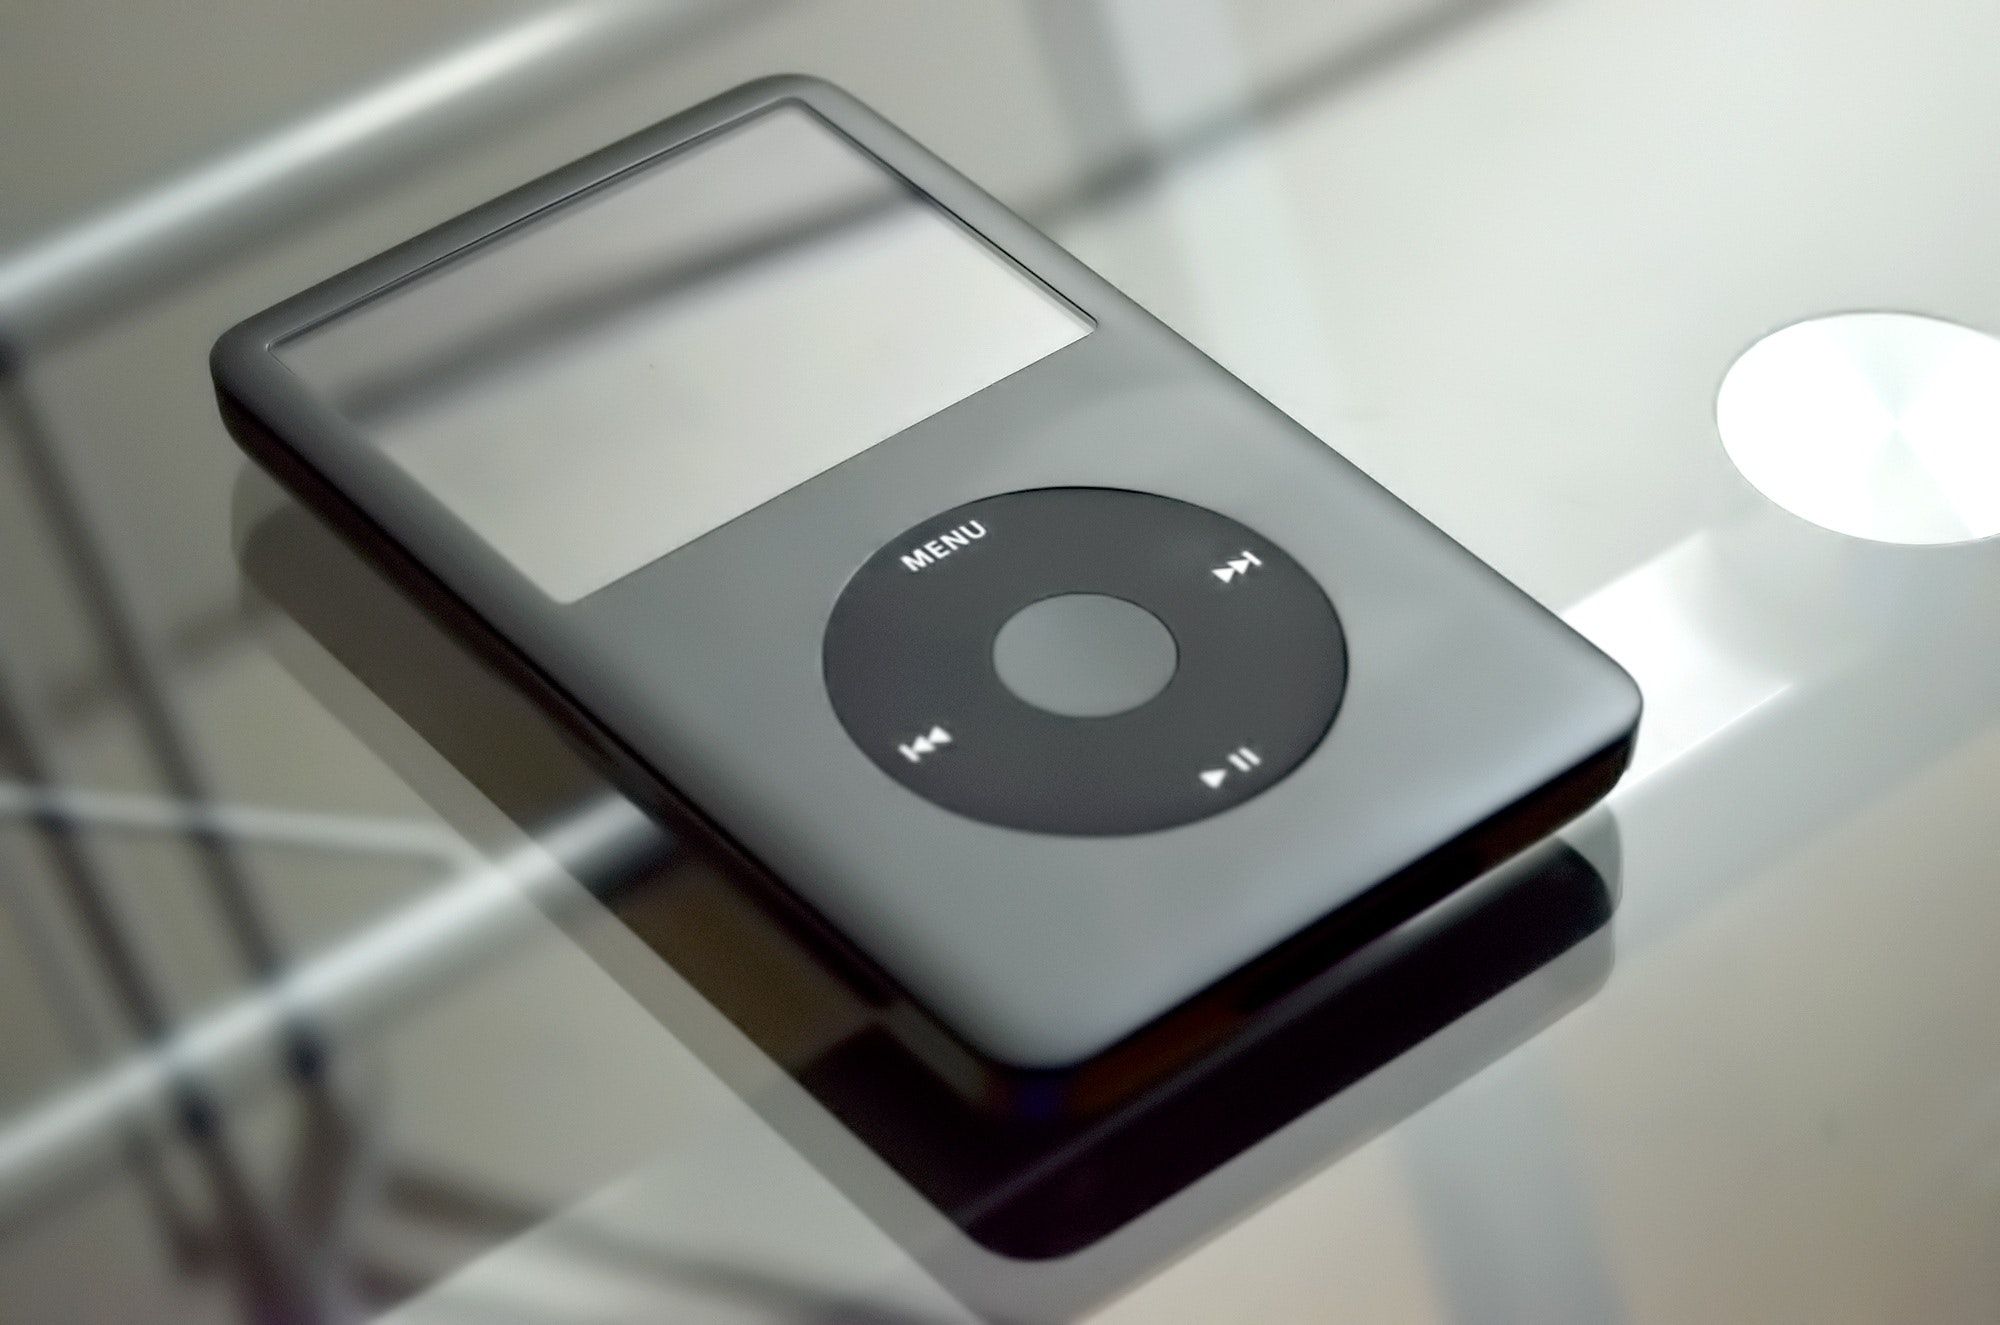 iPod abu-abu di atas meja kaca